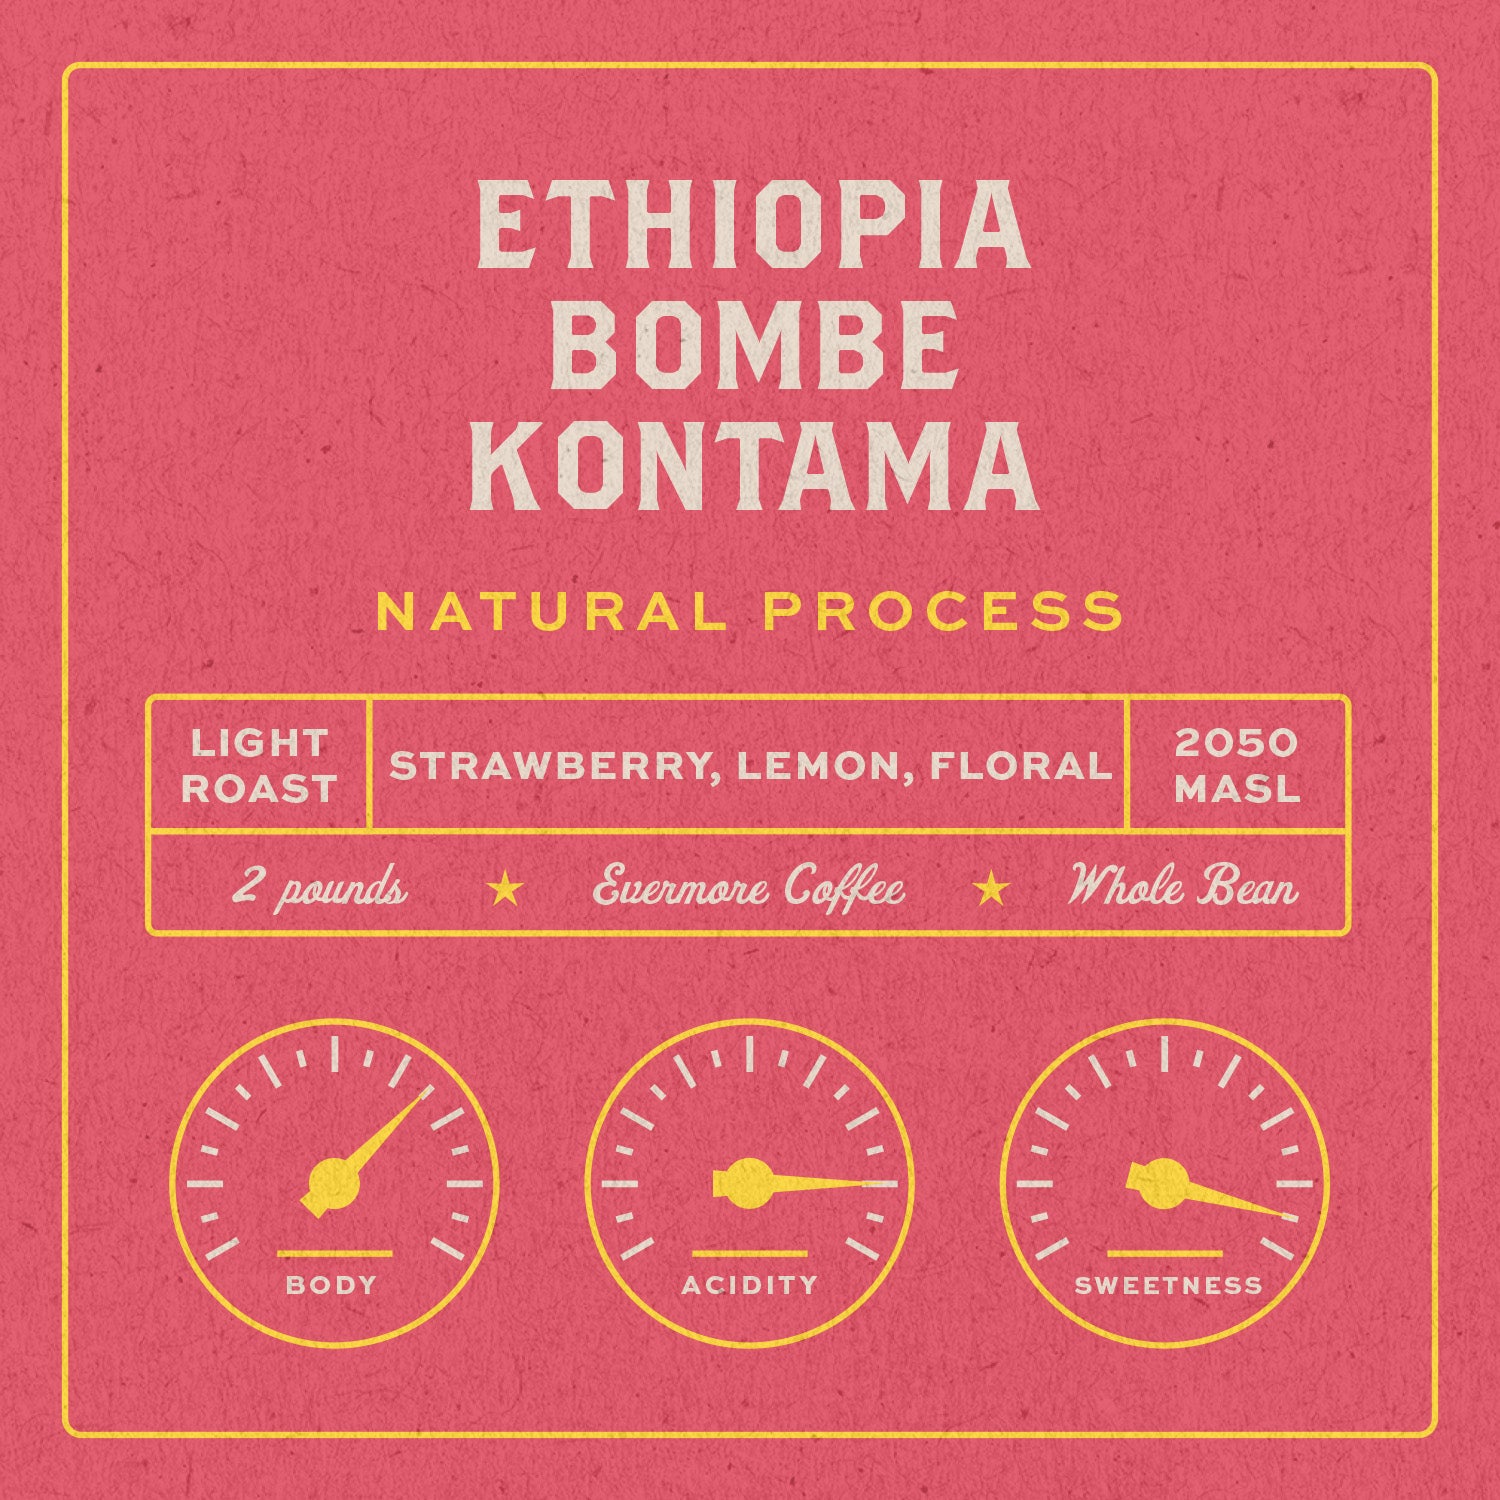 Evermore - Web Square_Ethiopia Bombe Kantama 2lb copy.jpg__PID:bb4e5b99-733e-4763-bb83-1ab00680236d